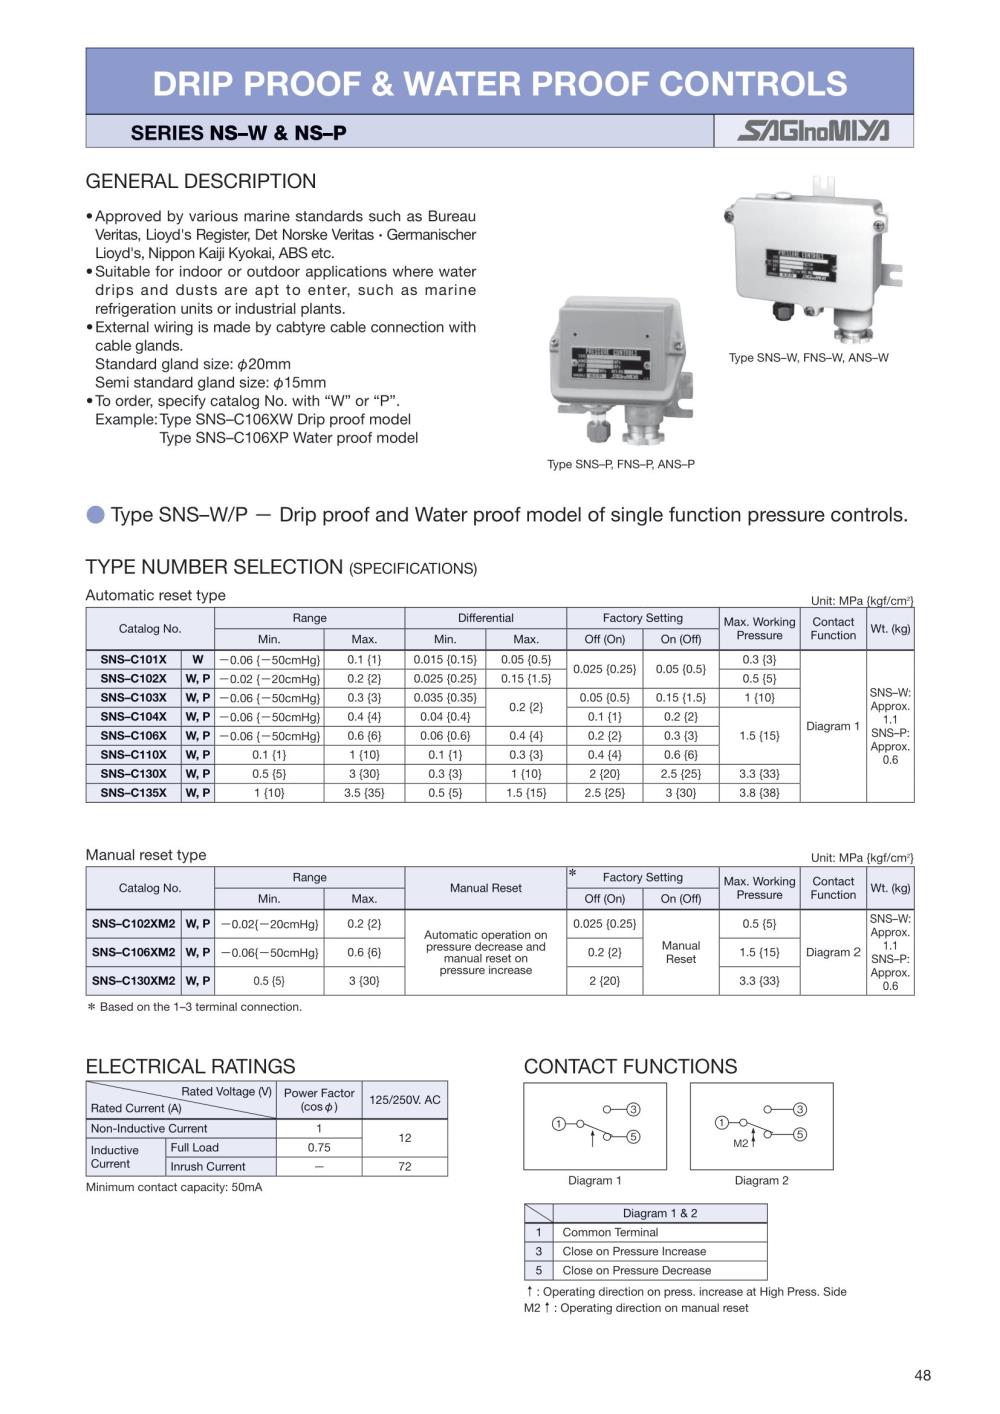 SAGINOMIYA Pressure Control SNS-W Series